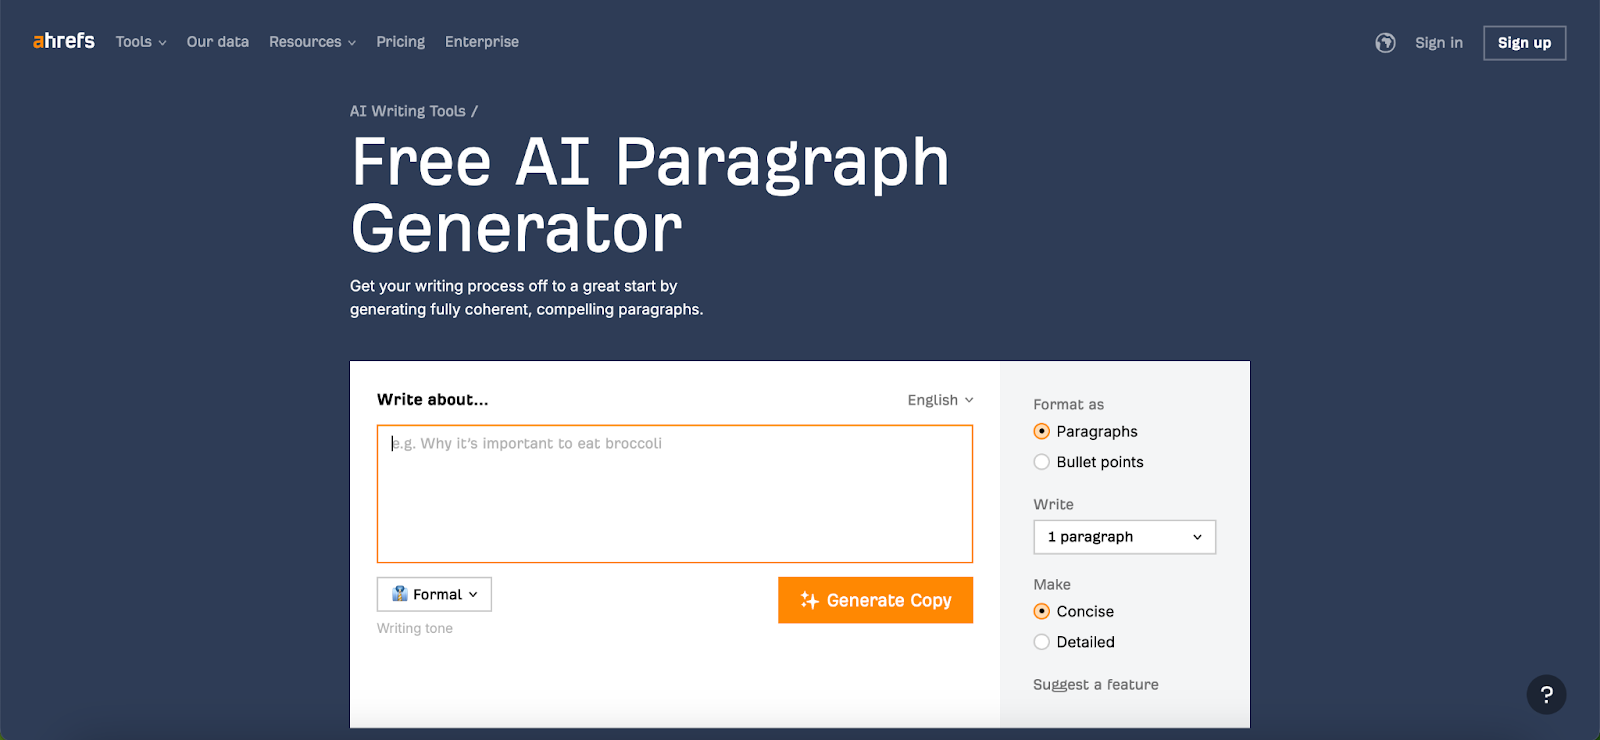 AI paragraph generator tools - Ahrefs Free AI Paragraph Generator